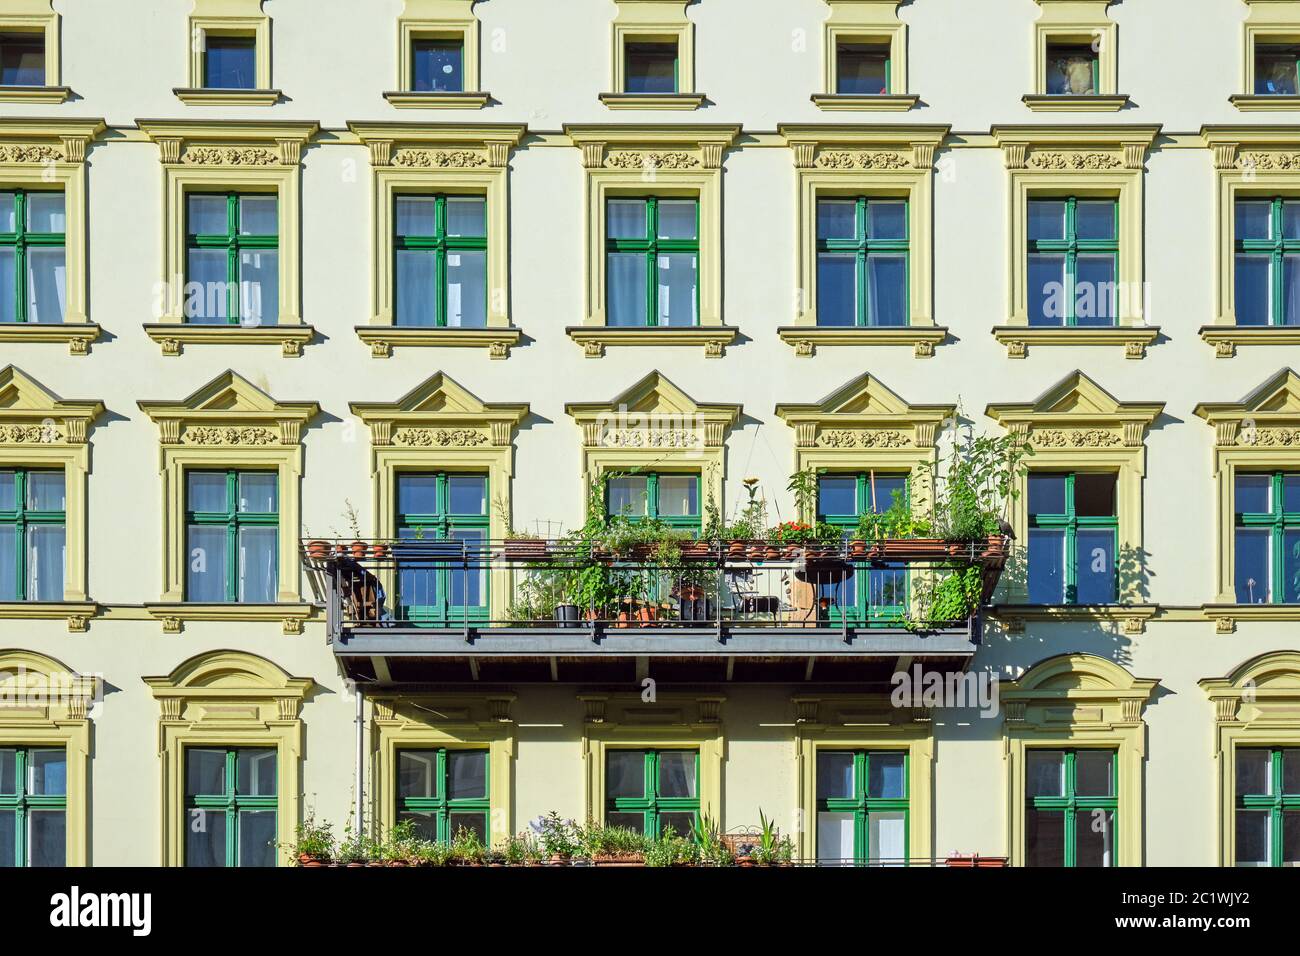 Façade d'un immeuble ancien rénové vert vu à Berlin, Allemagne Banque D'Images